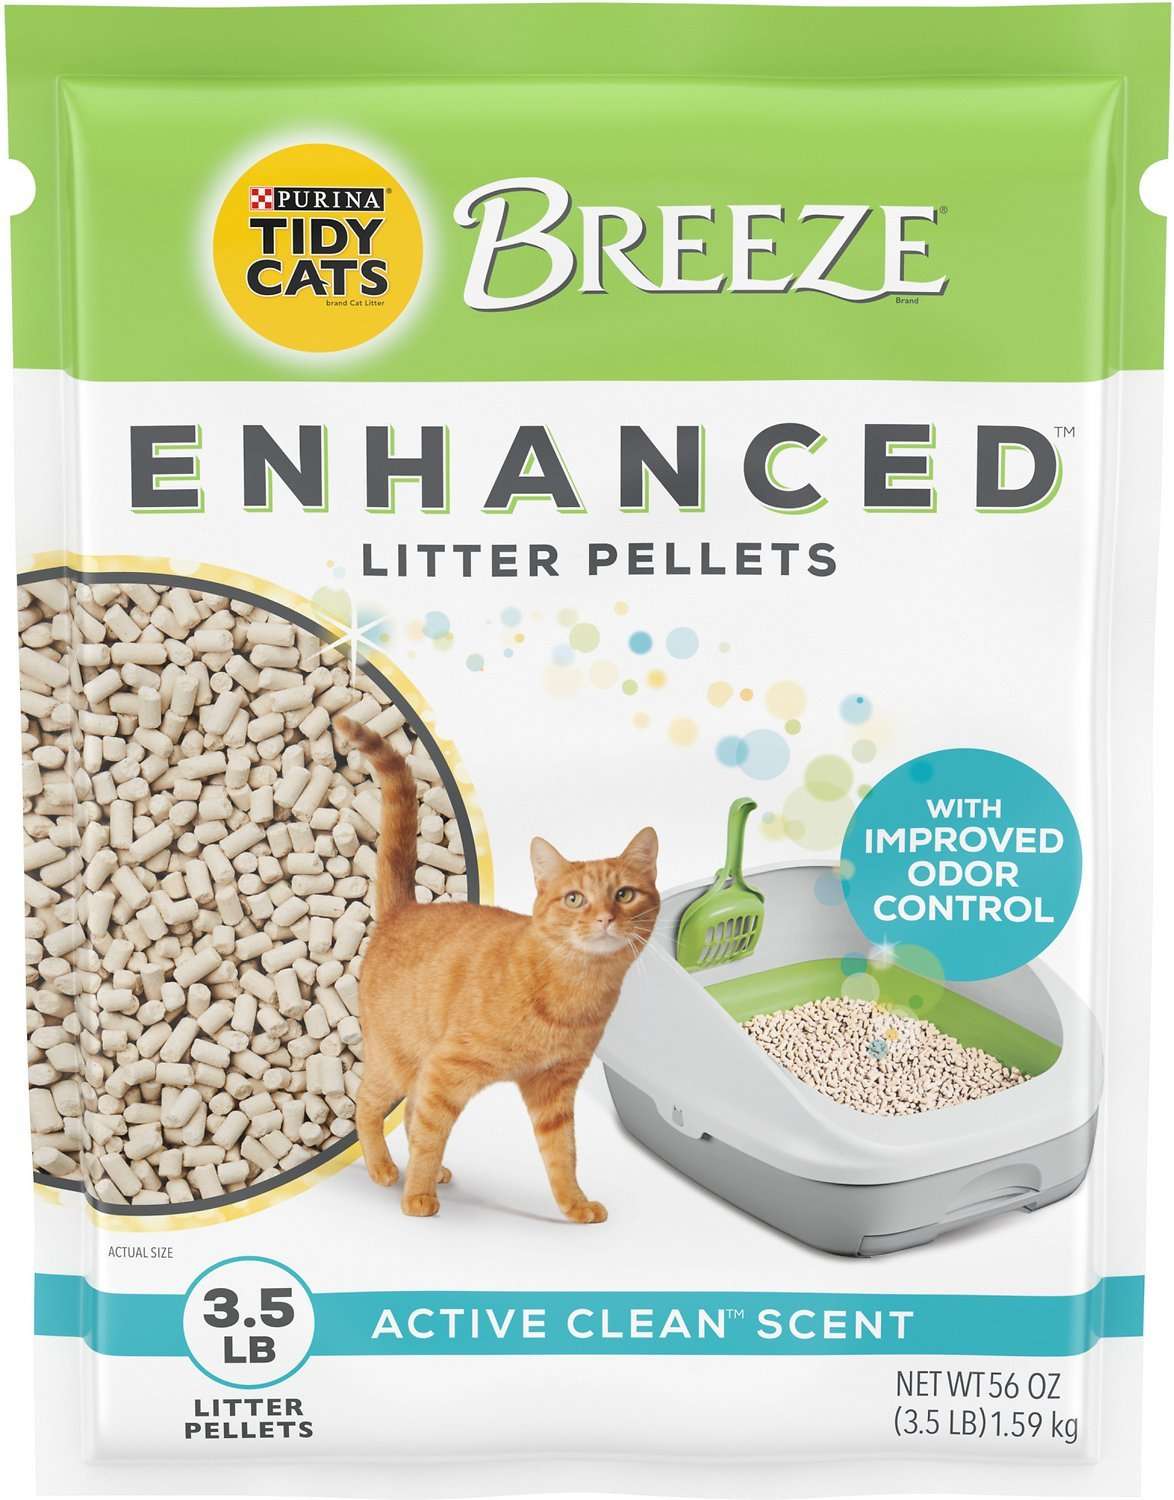 TIDY CATS Breeze Cat Litter Enhanced Pellets Refill, 3.5 ...